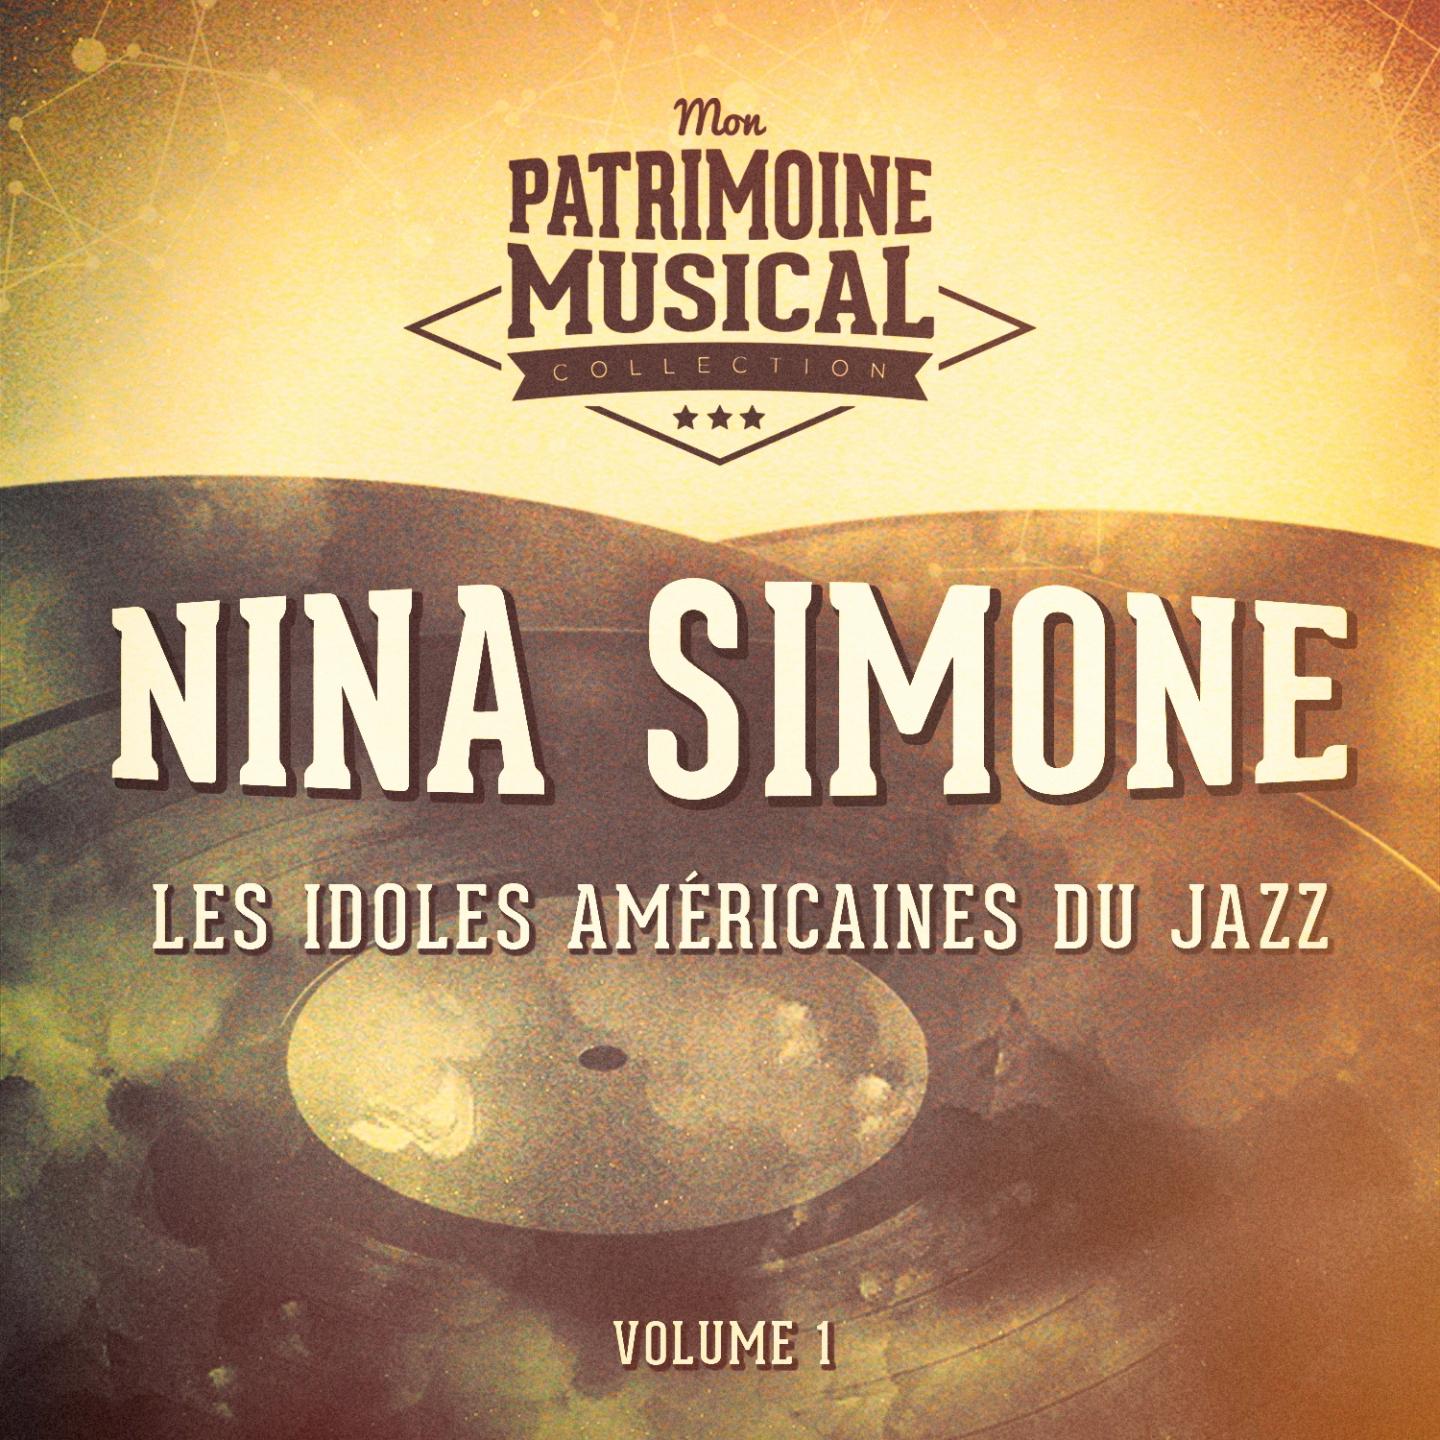 Les Idoles Ame ricaines Du Jazz: Nina Simone, Vol. 1